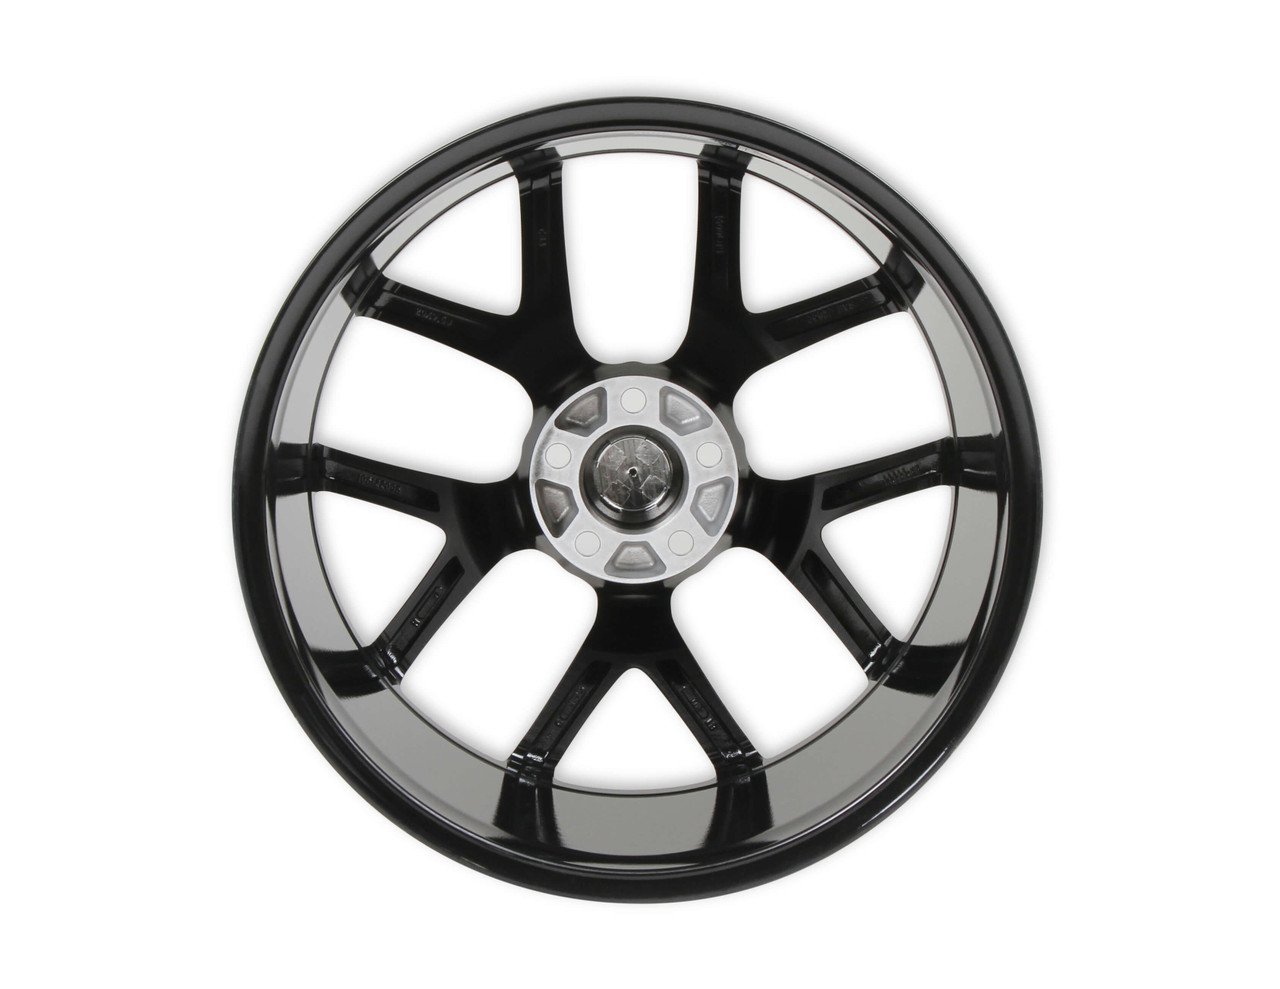 CS3-295430-B Carroll Shelby Wheels 20 x 9.5 in 5 x 114.3 40mm Offset Gloss Black